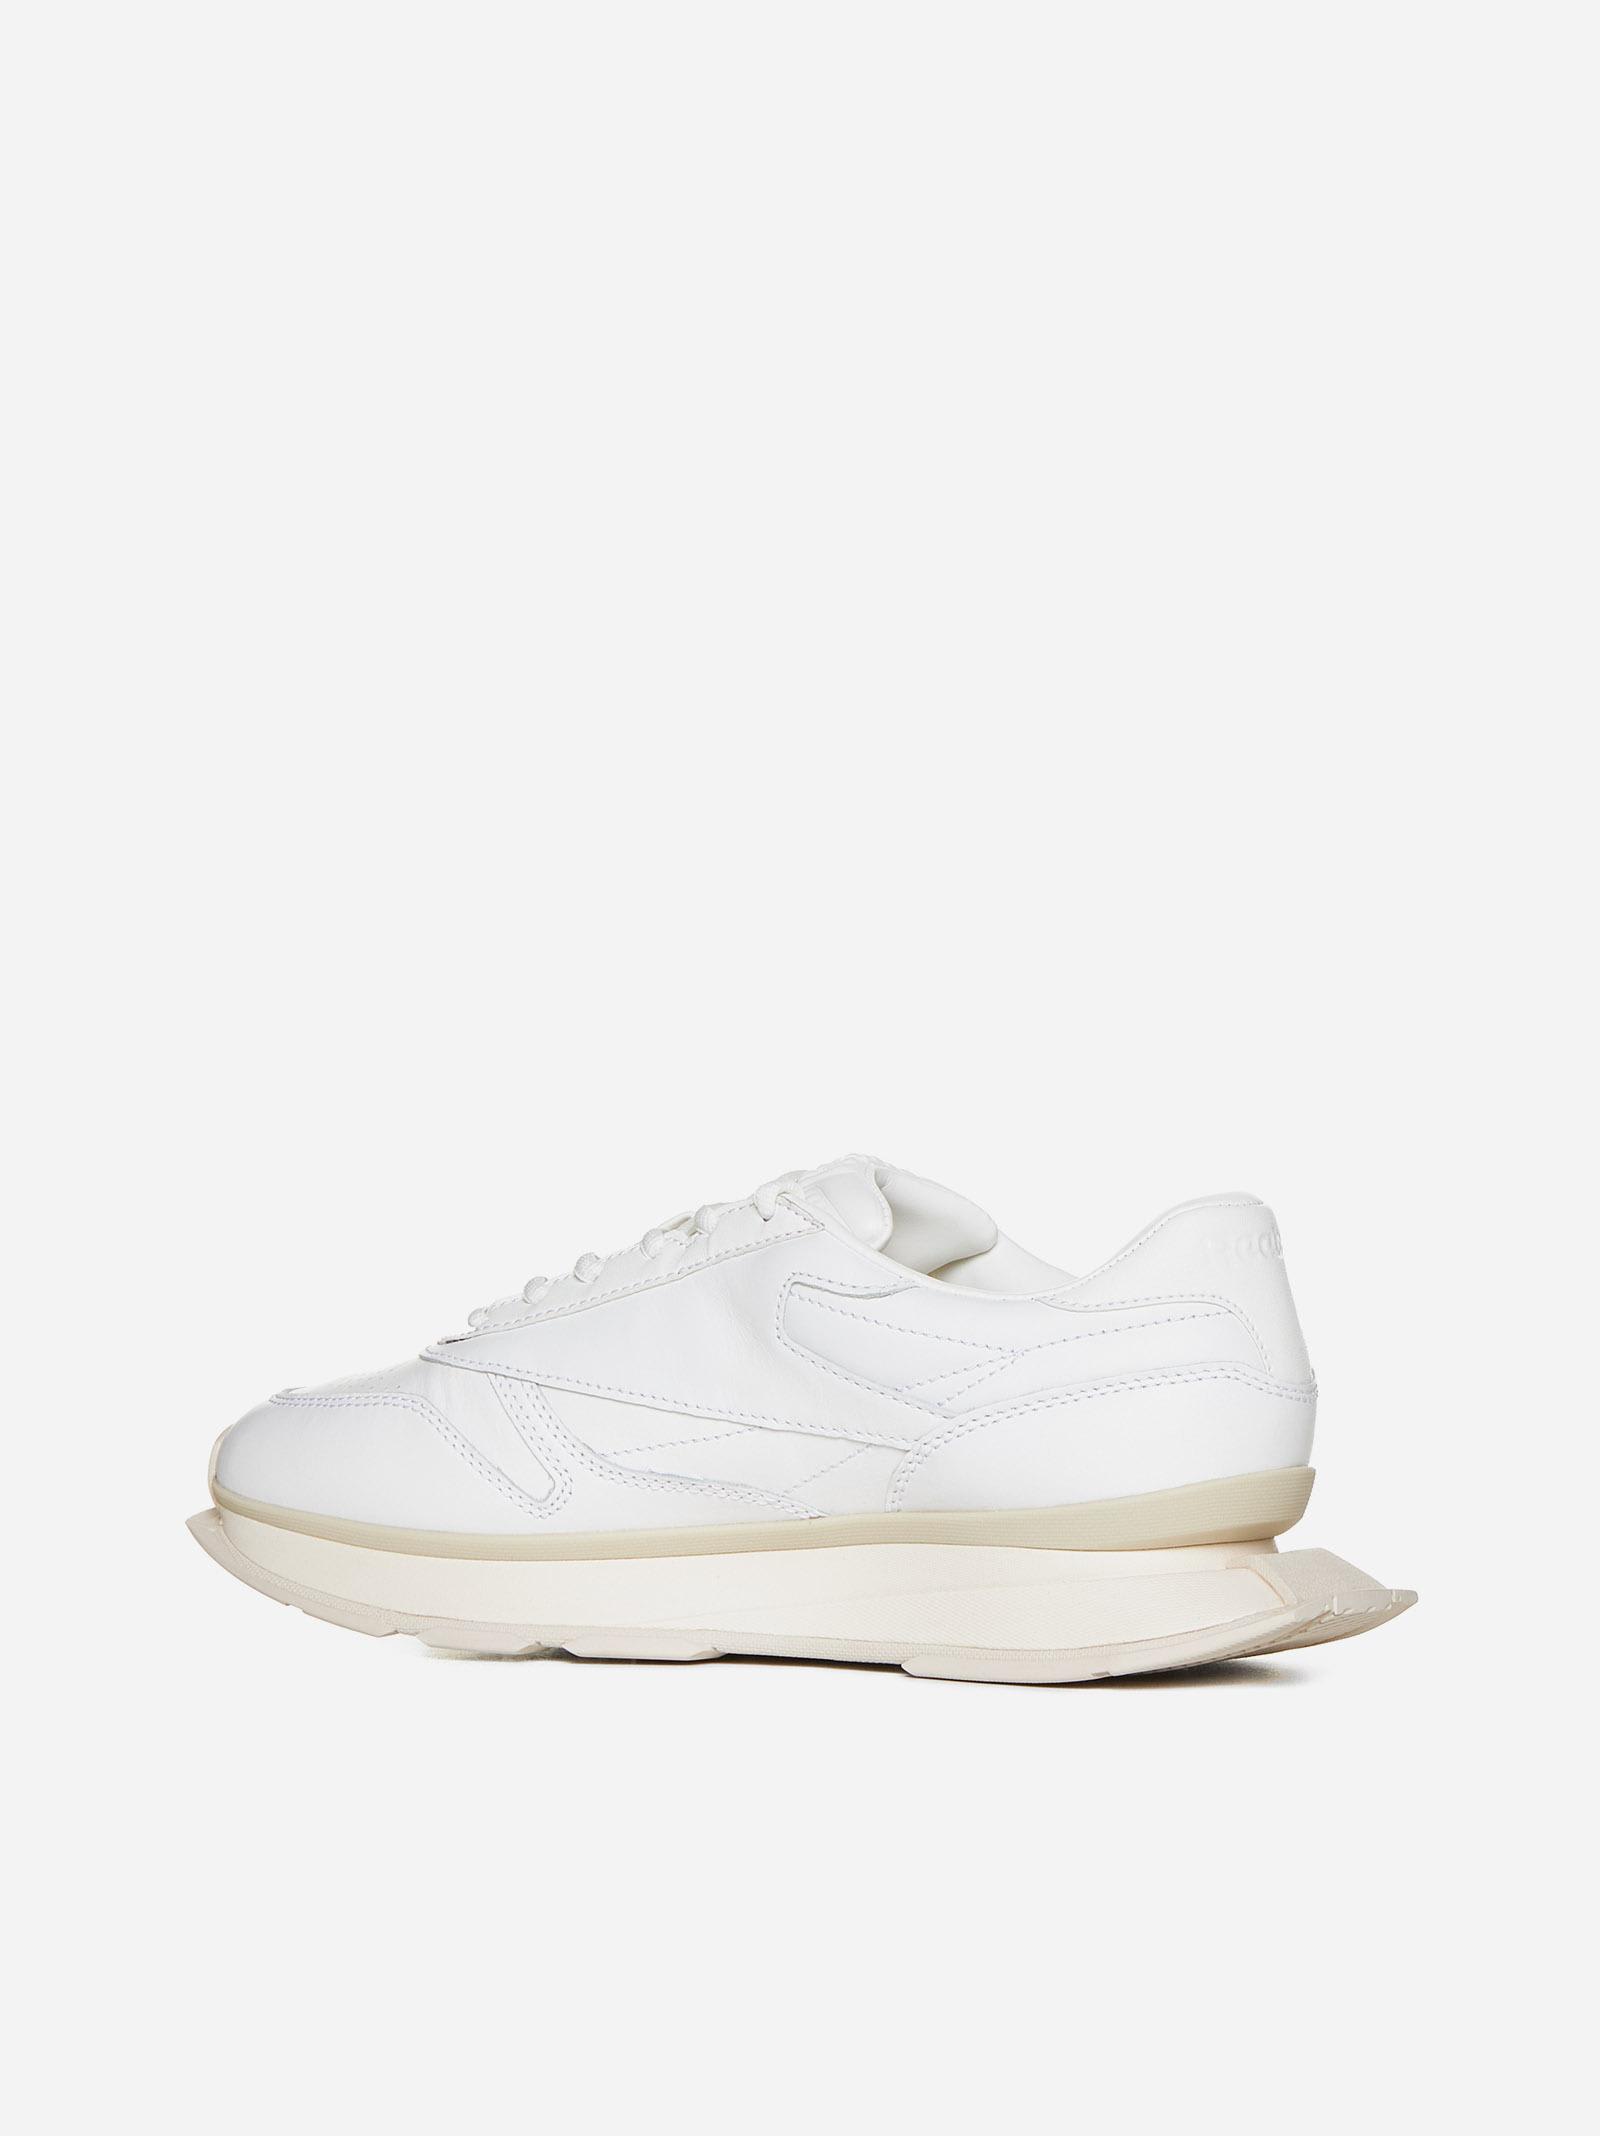 Shop Reebok Ltd Leather Sneakers In White Lthe